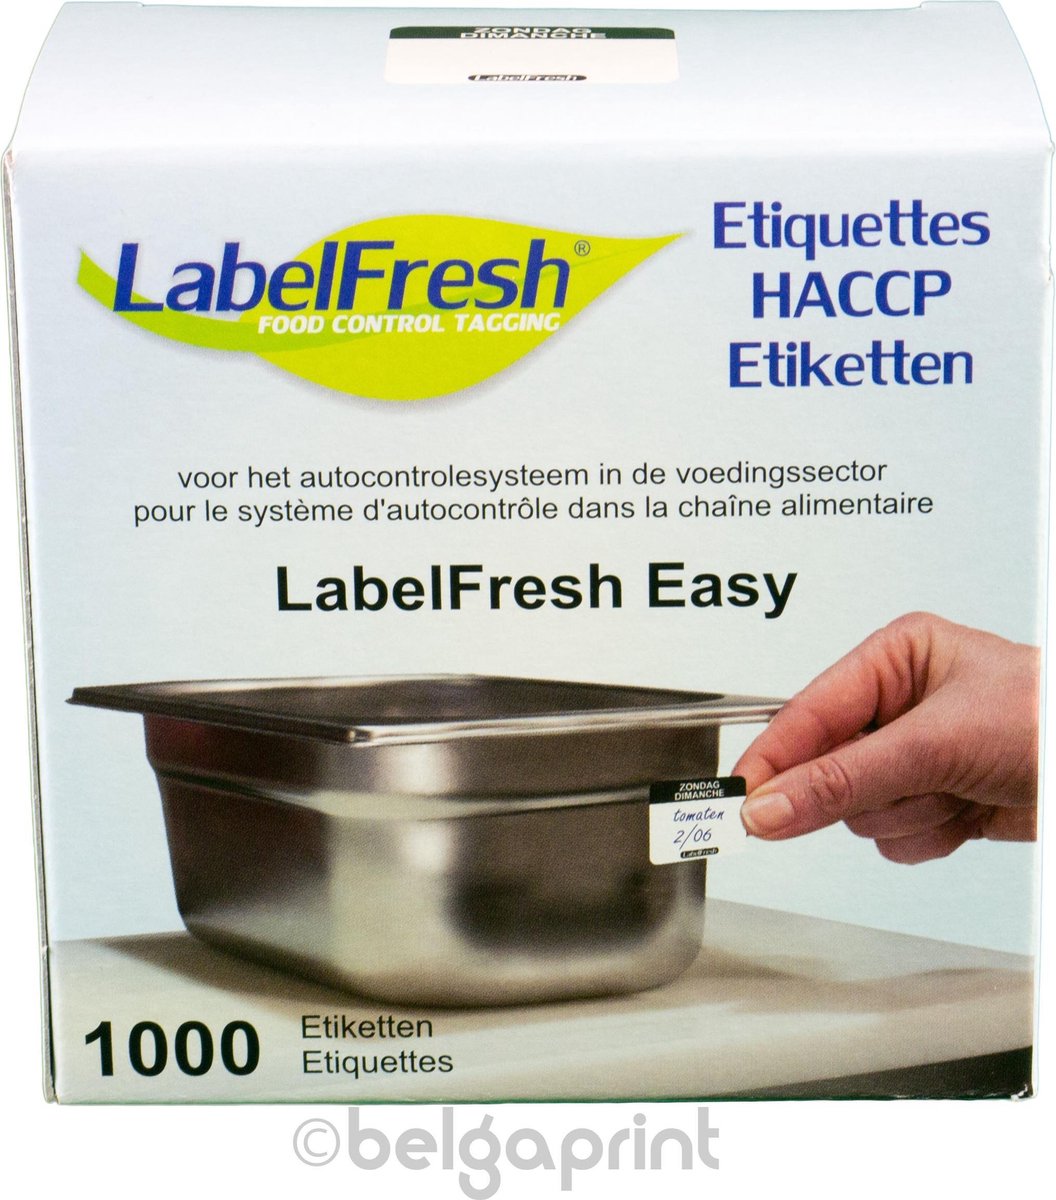 1000 LabelFresh Easy - 30x25 mm - zondag-dimanche -HACCP etiketten / stickers